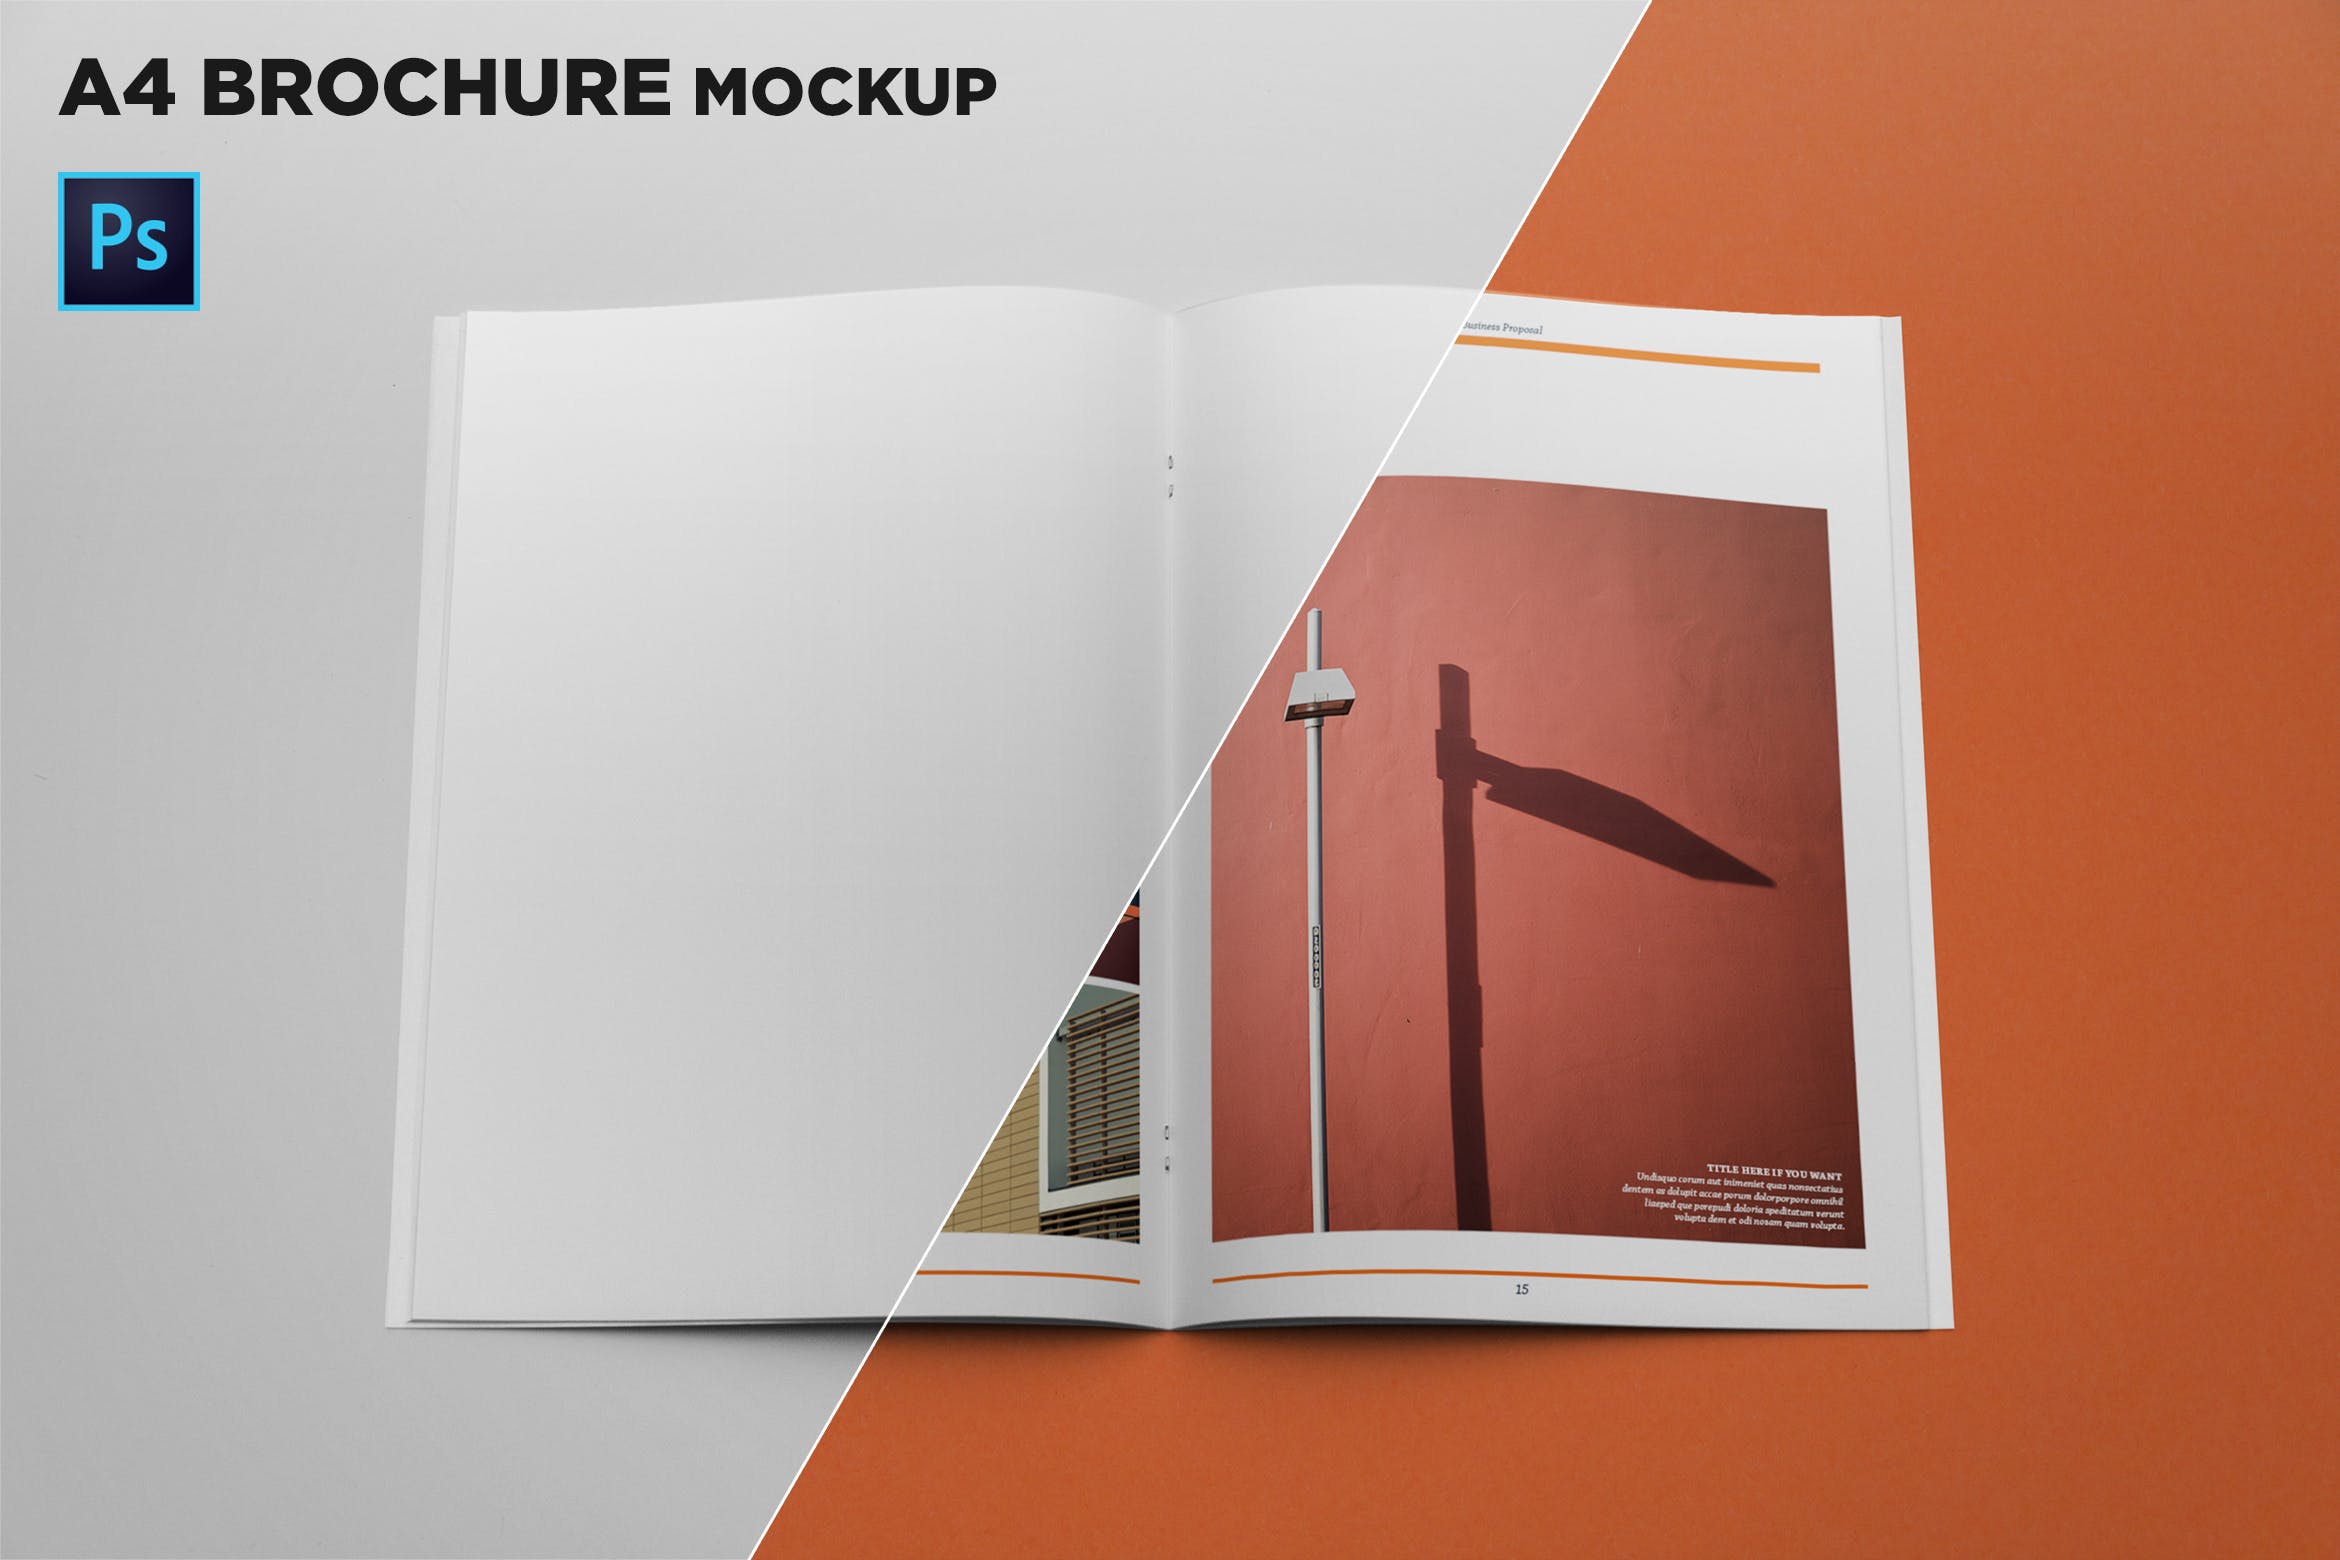 A4宣传小册子/企业画册内页设计顶视图样机第一素材精选 A4 Brochure Mockup Top View插图